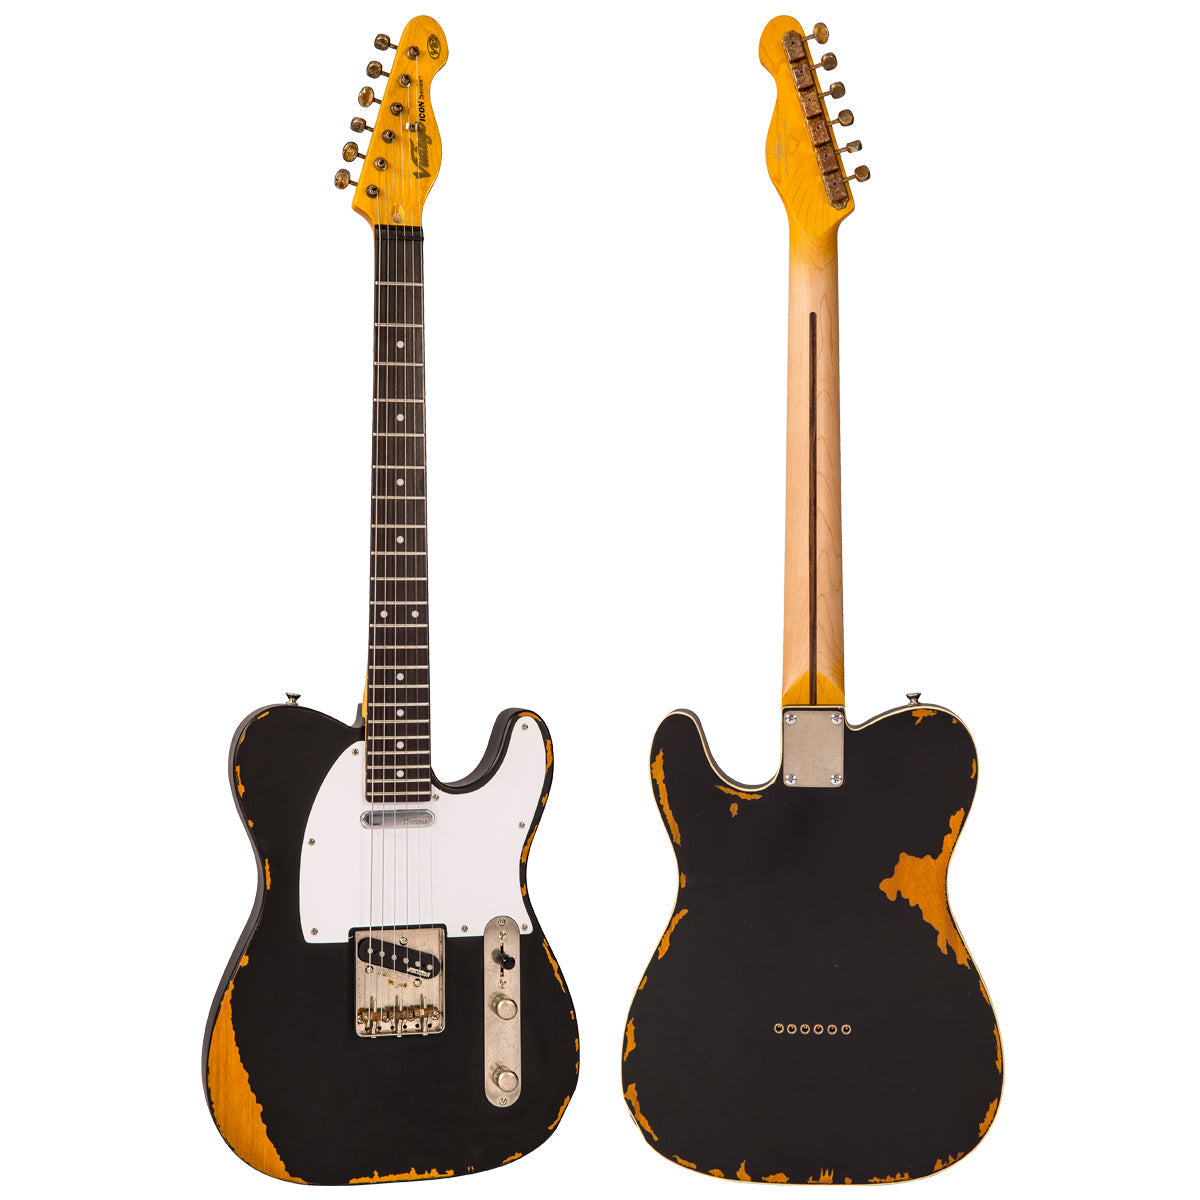 Vintage V62 ICON Electric Guitar ~ Distressed Black, Electric Guitar for sale at Richards Guitars.